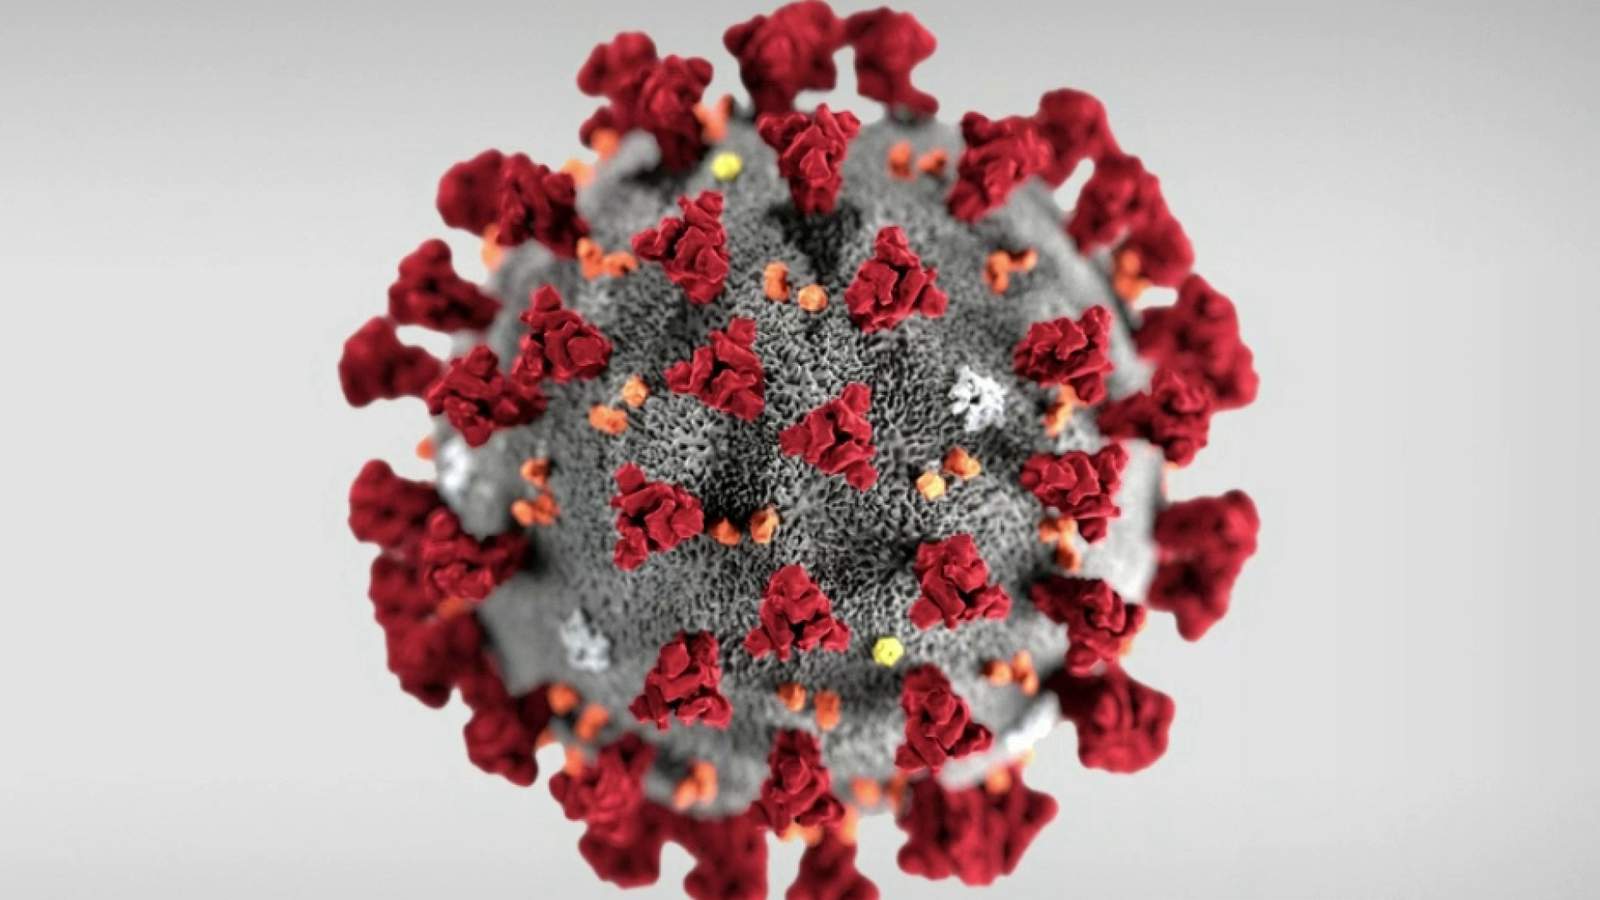 Washtenaw County declares state of emergency over coronavirus